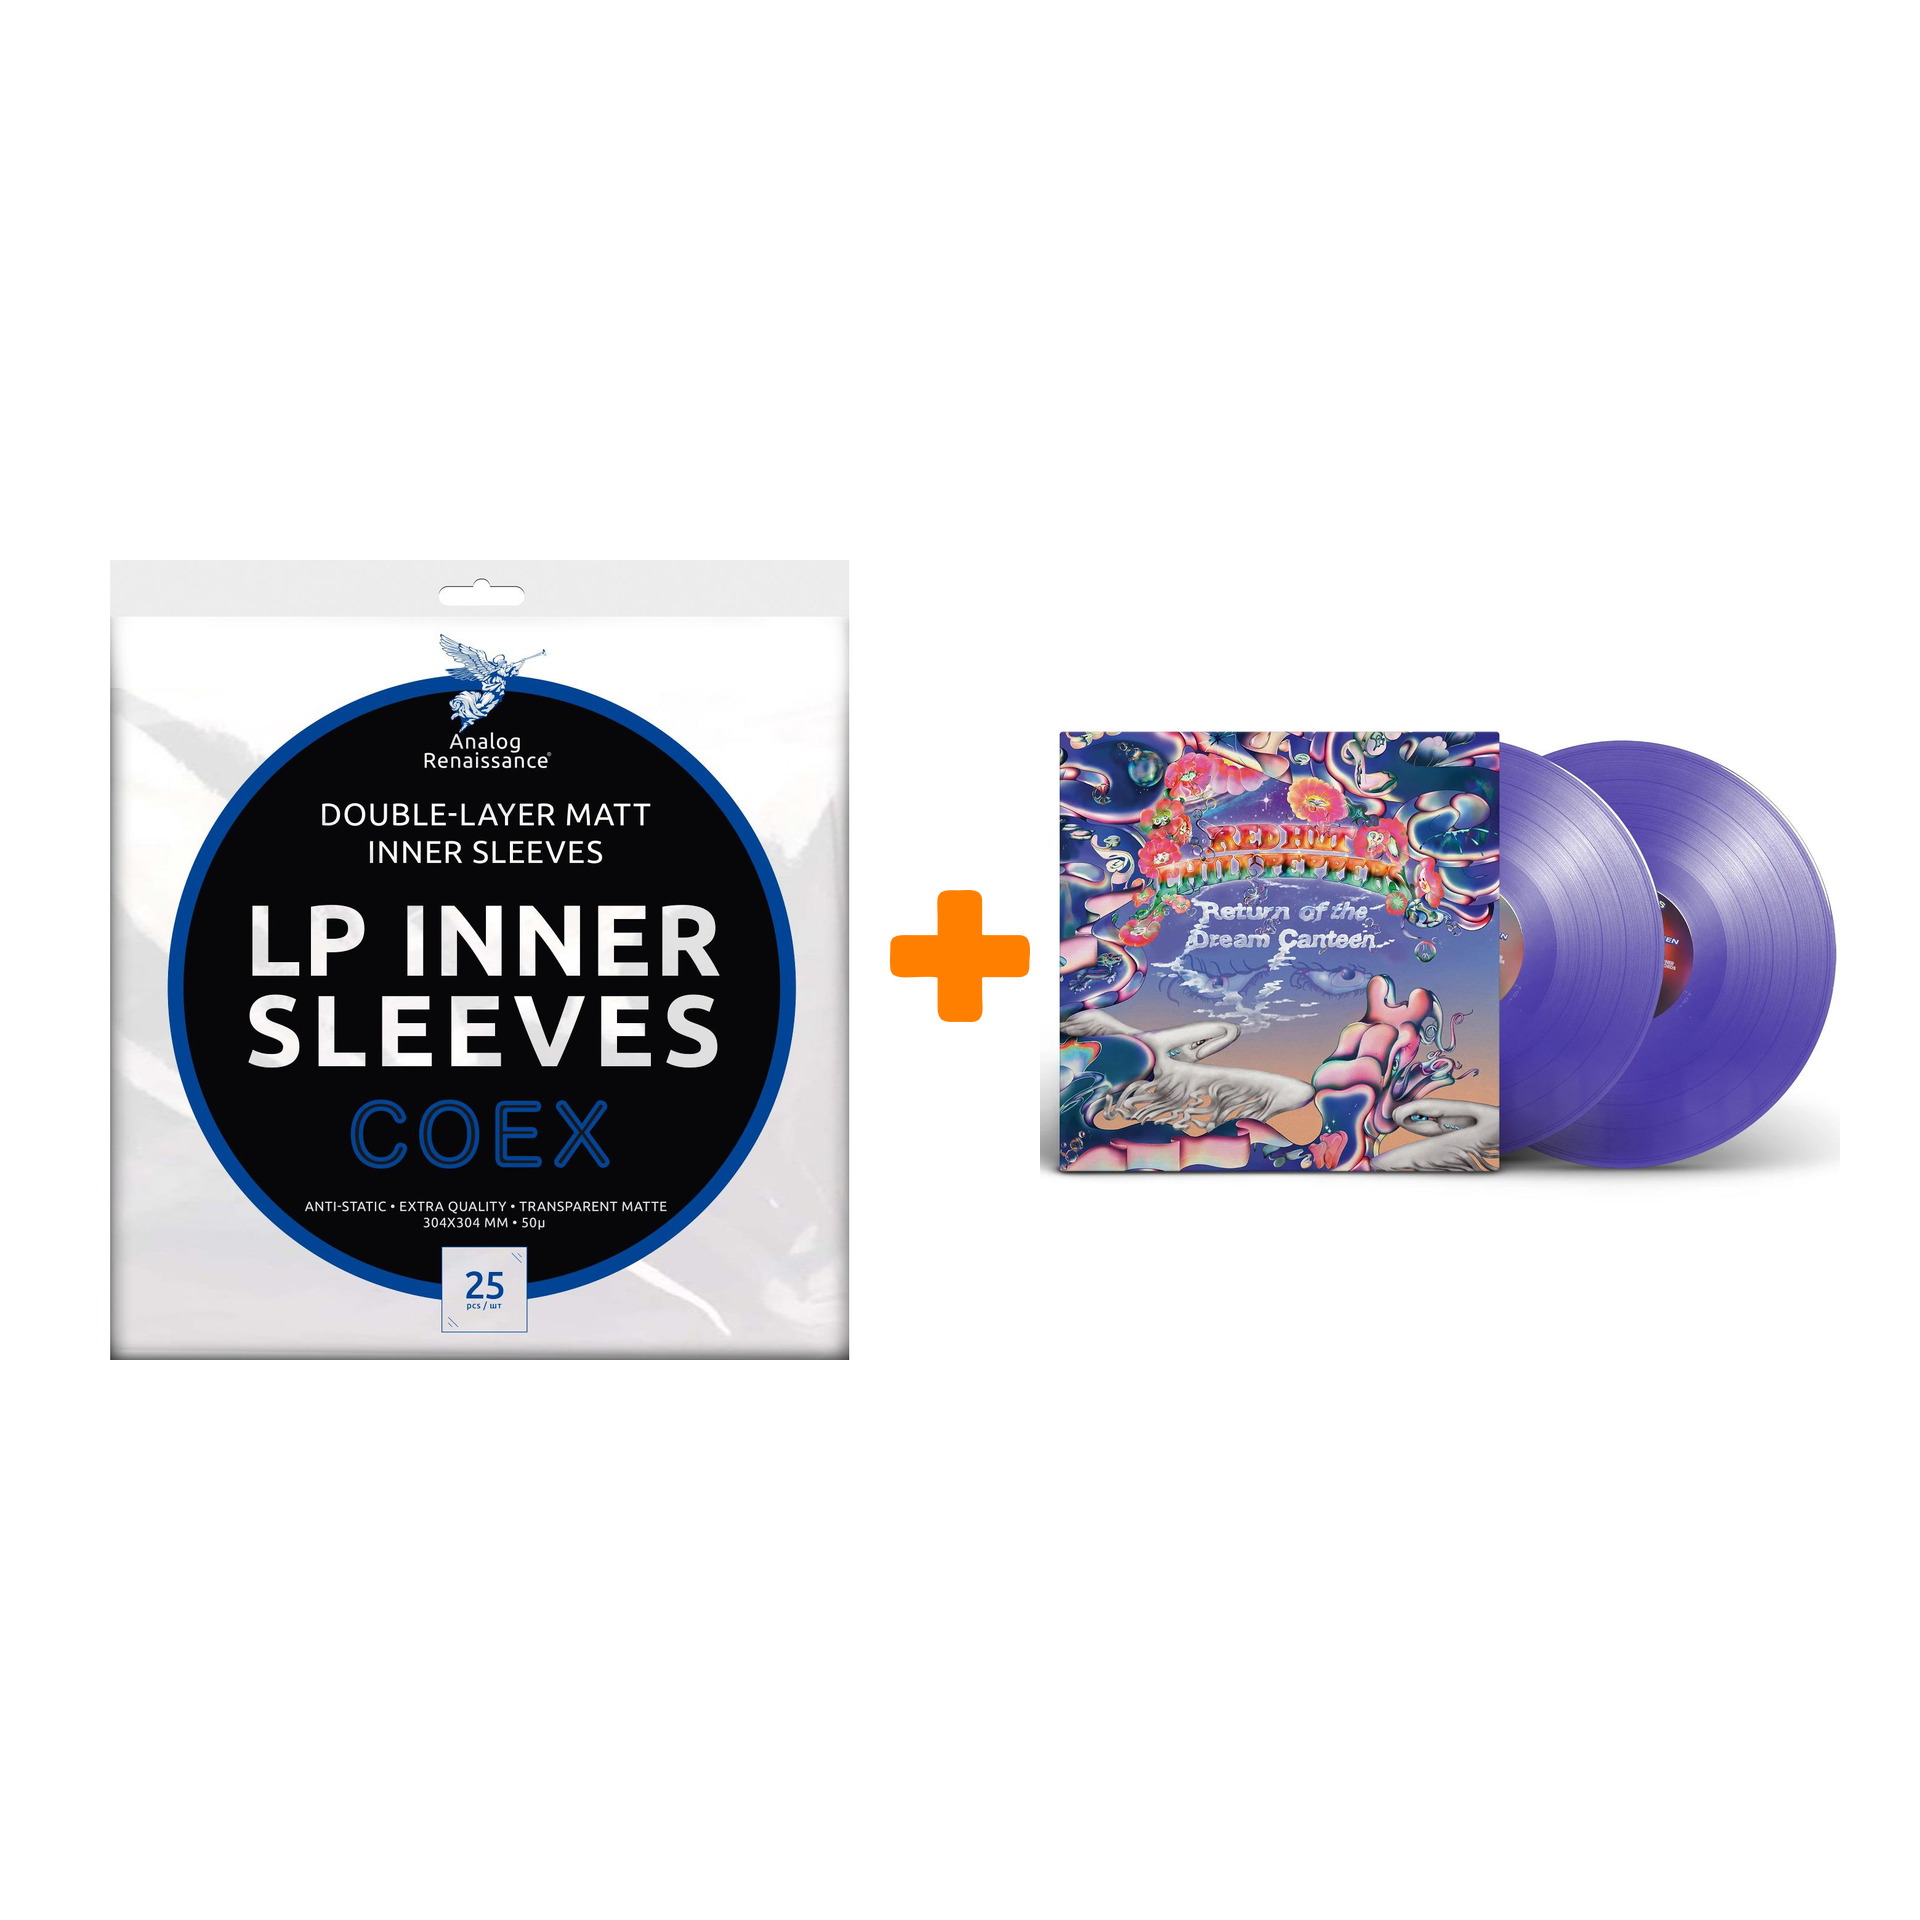 RED HOT CHILI PEPPERS Return Of The Dream Canteen Coloured Purple Vinyl 2LP + Конверты внутренние COEX для грампластинок 12 25шт Набор